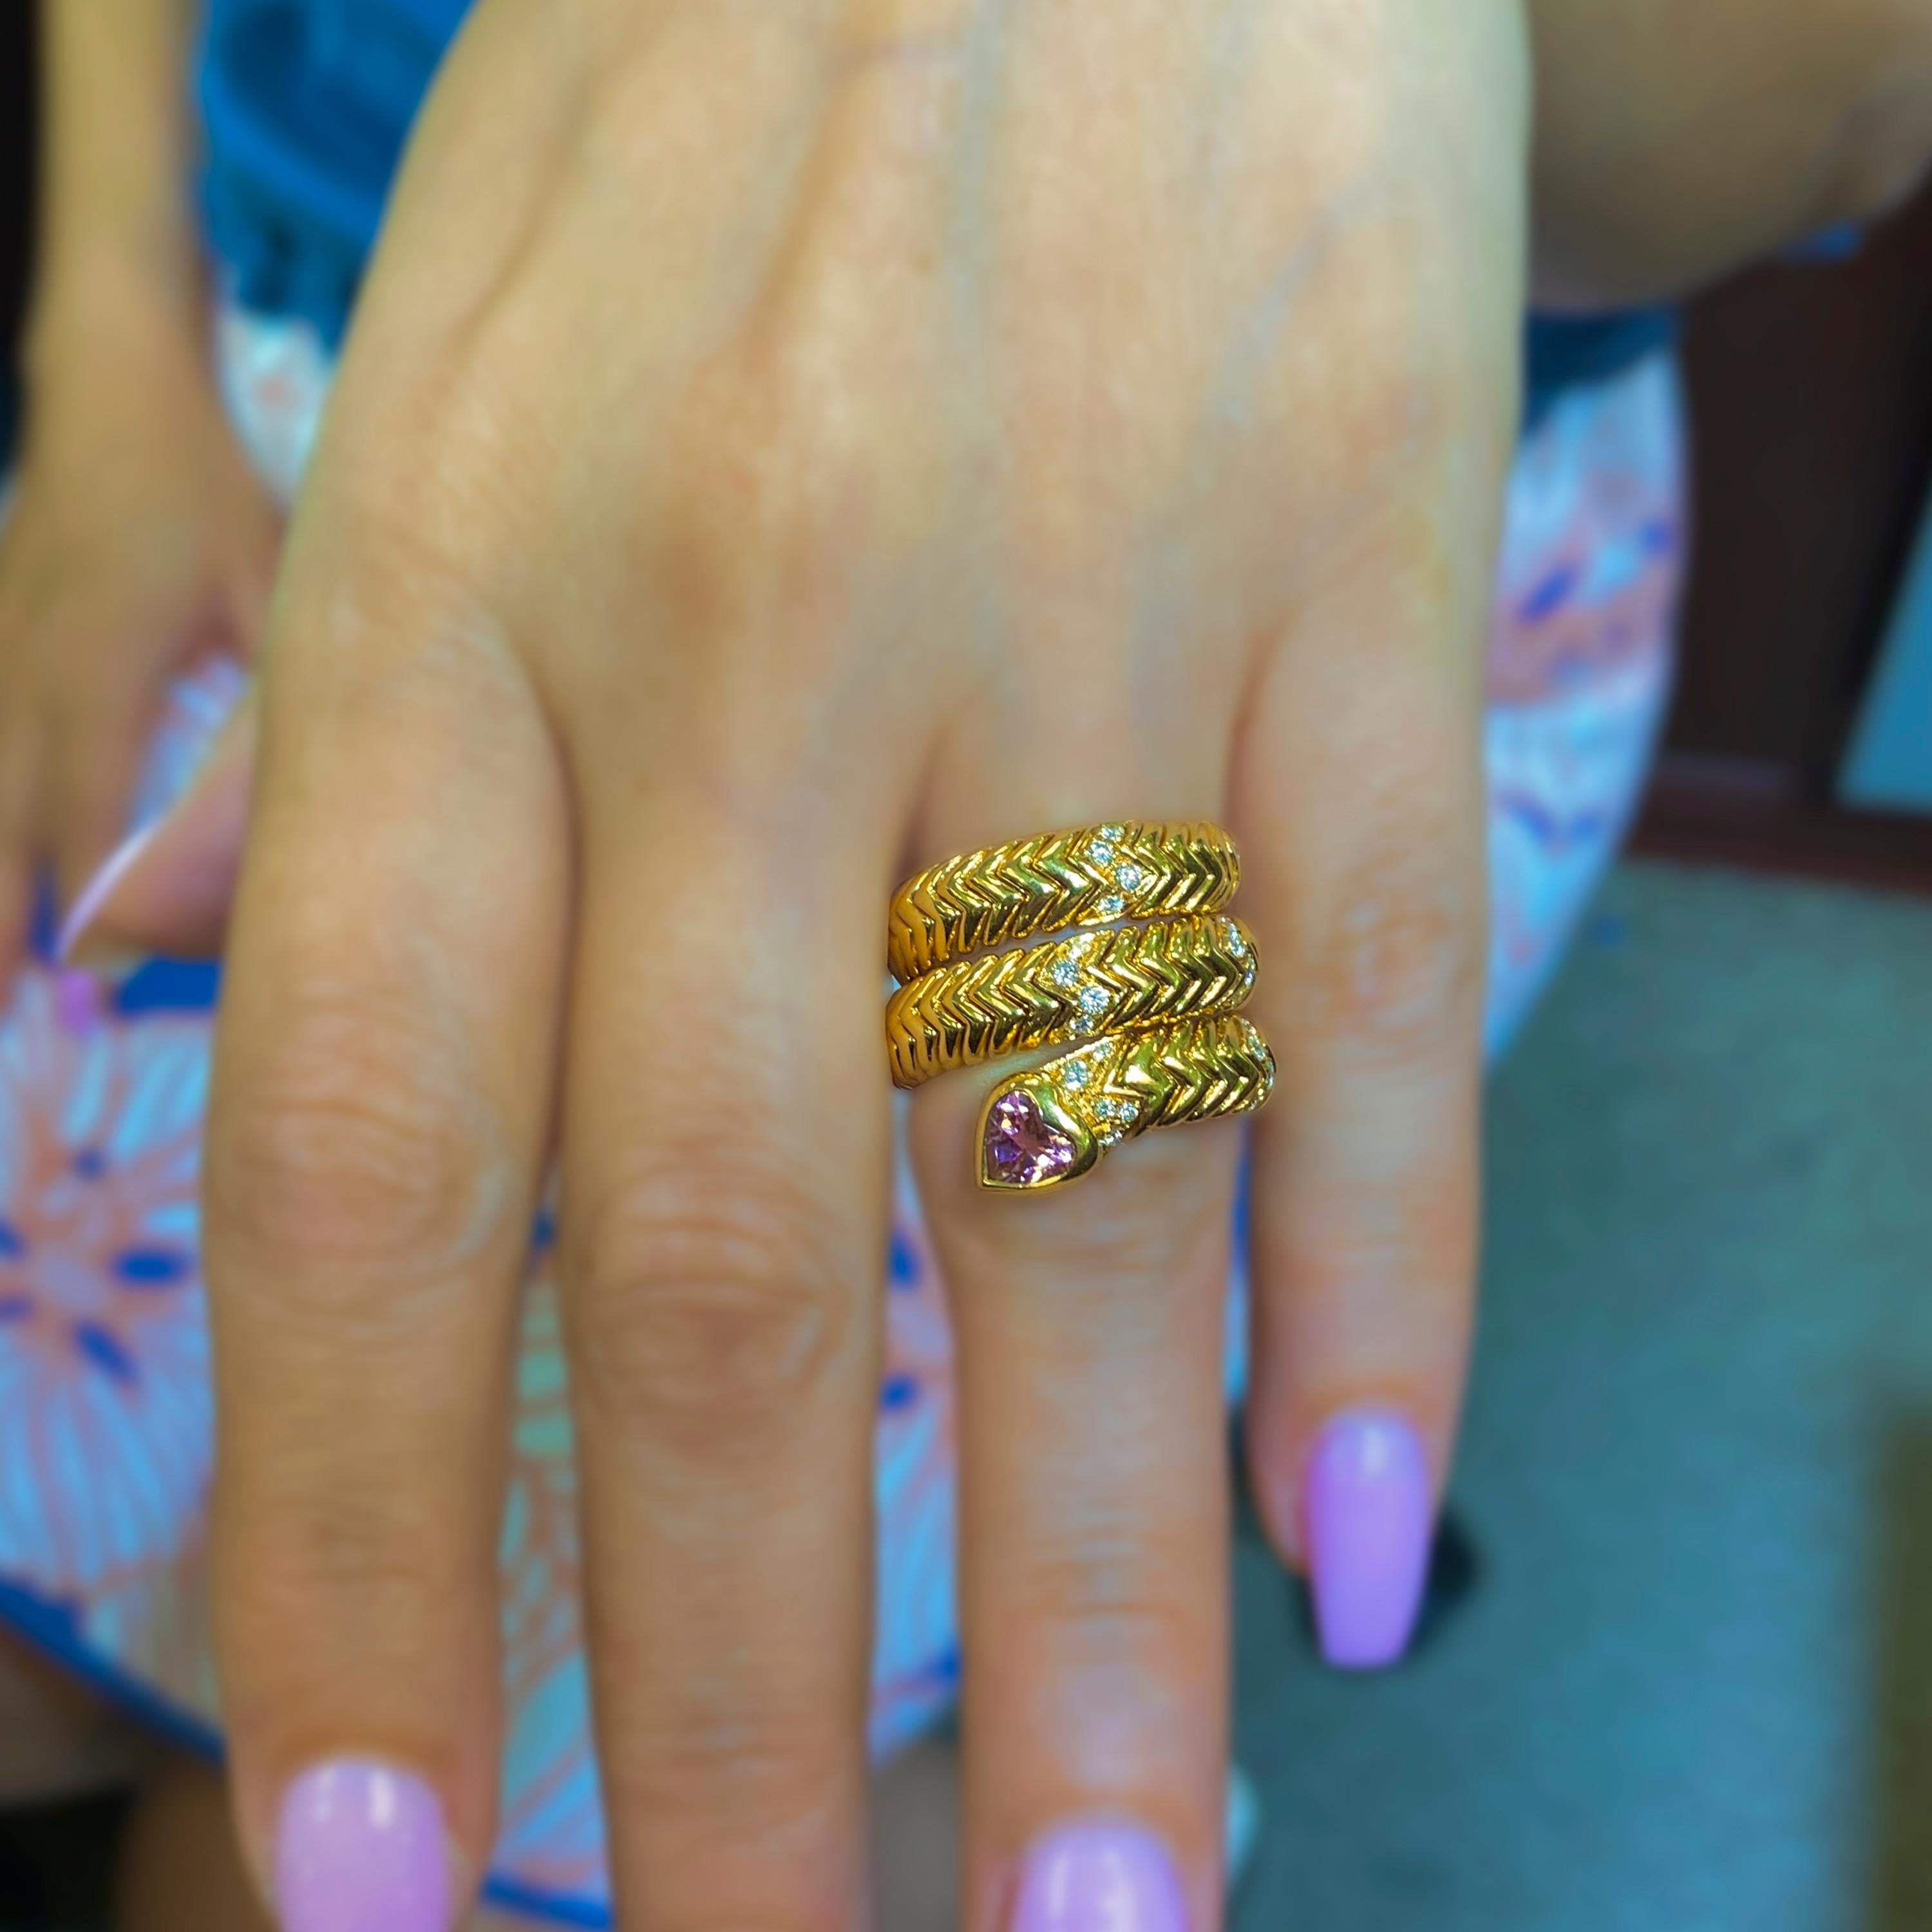 Bulgari Serpenti Tubogas 18K Yellow Gold Diamond Pink Tourmaline Ring

Part of the 